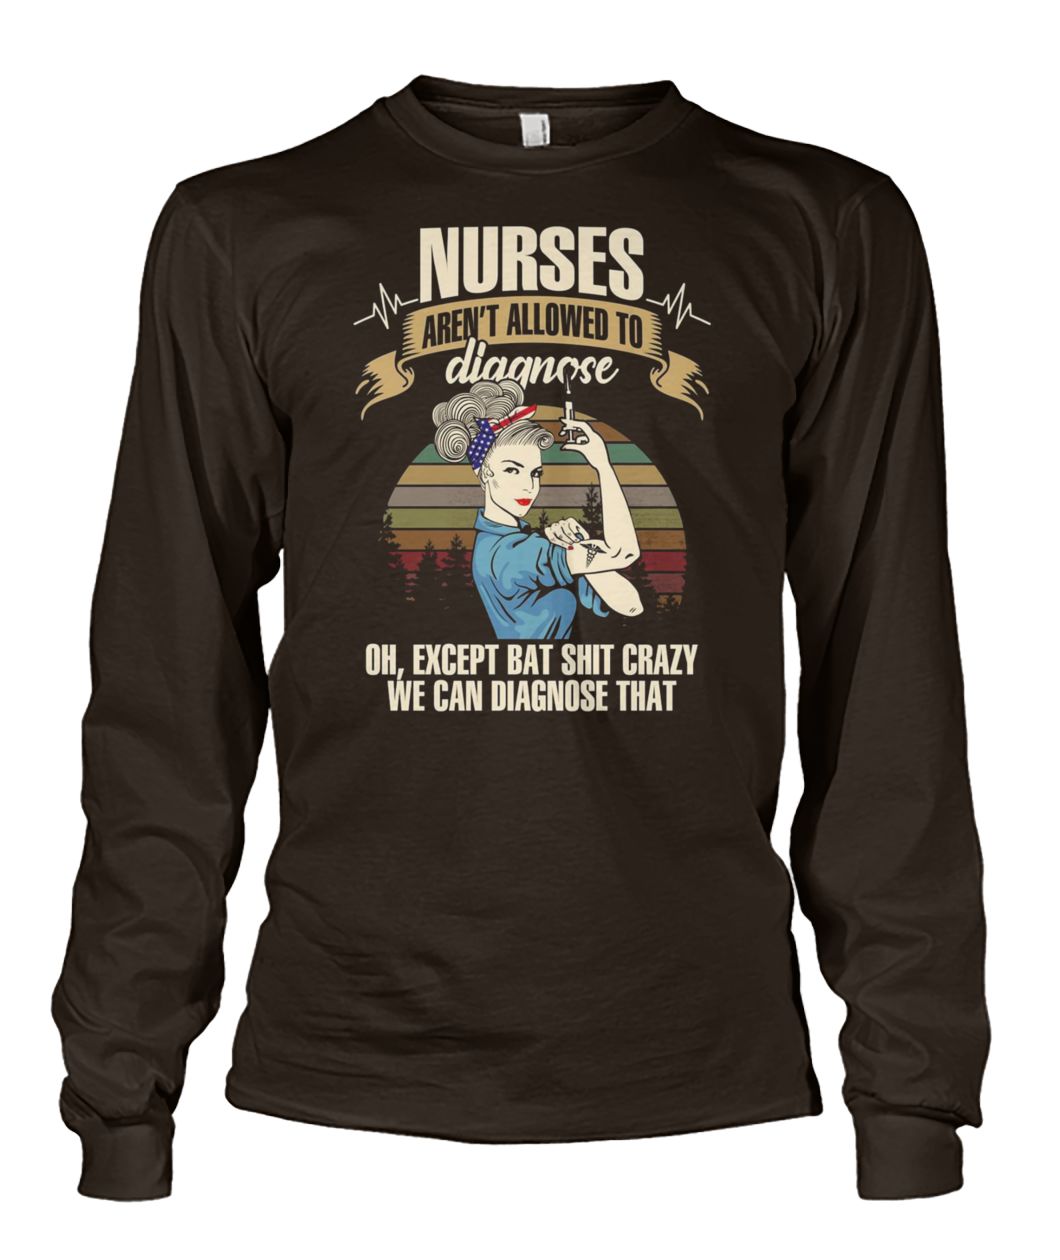 Vintage nurses aren't allowed to diagnose oh except bat shit crazy we can diagnose that nurselife unisex long sleeve